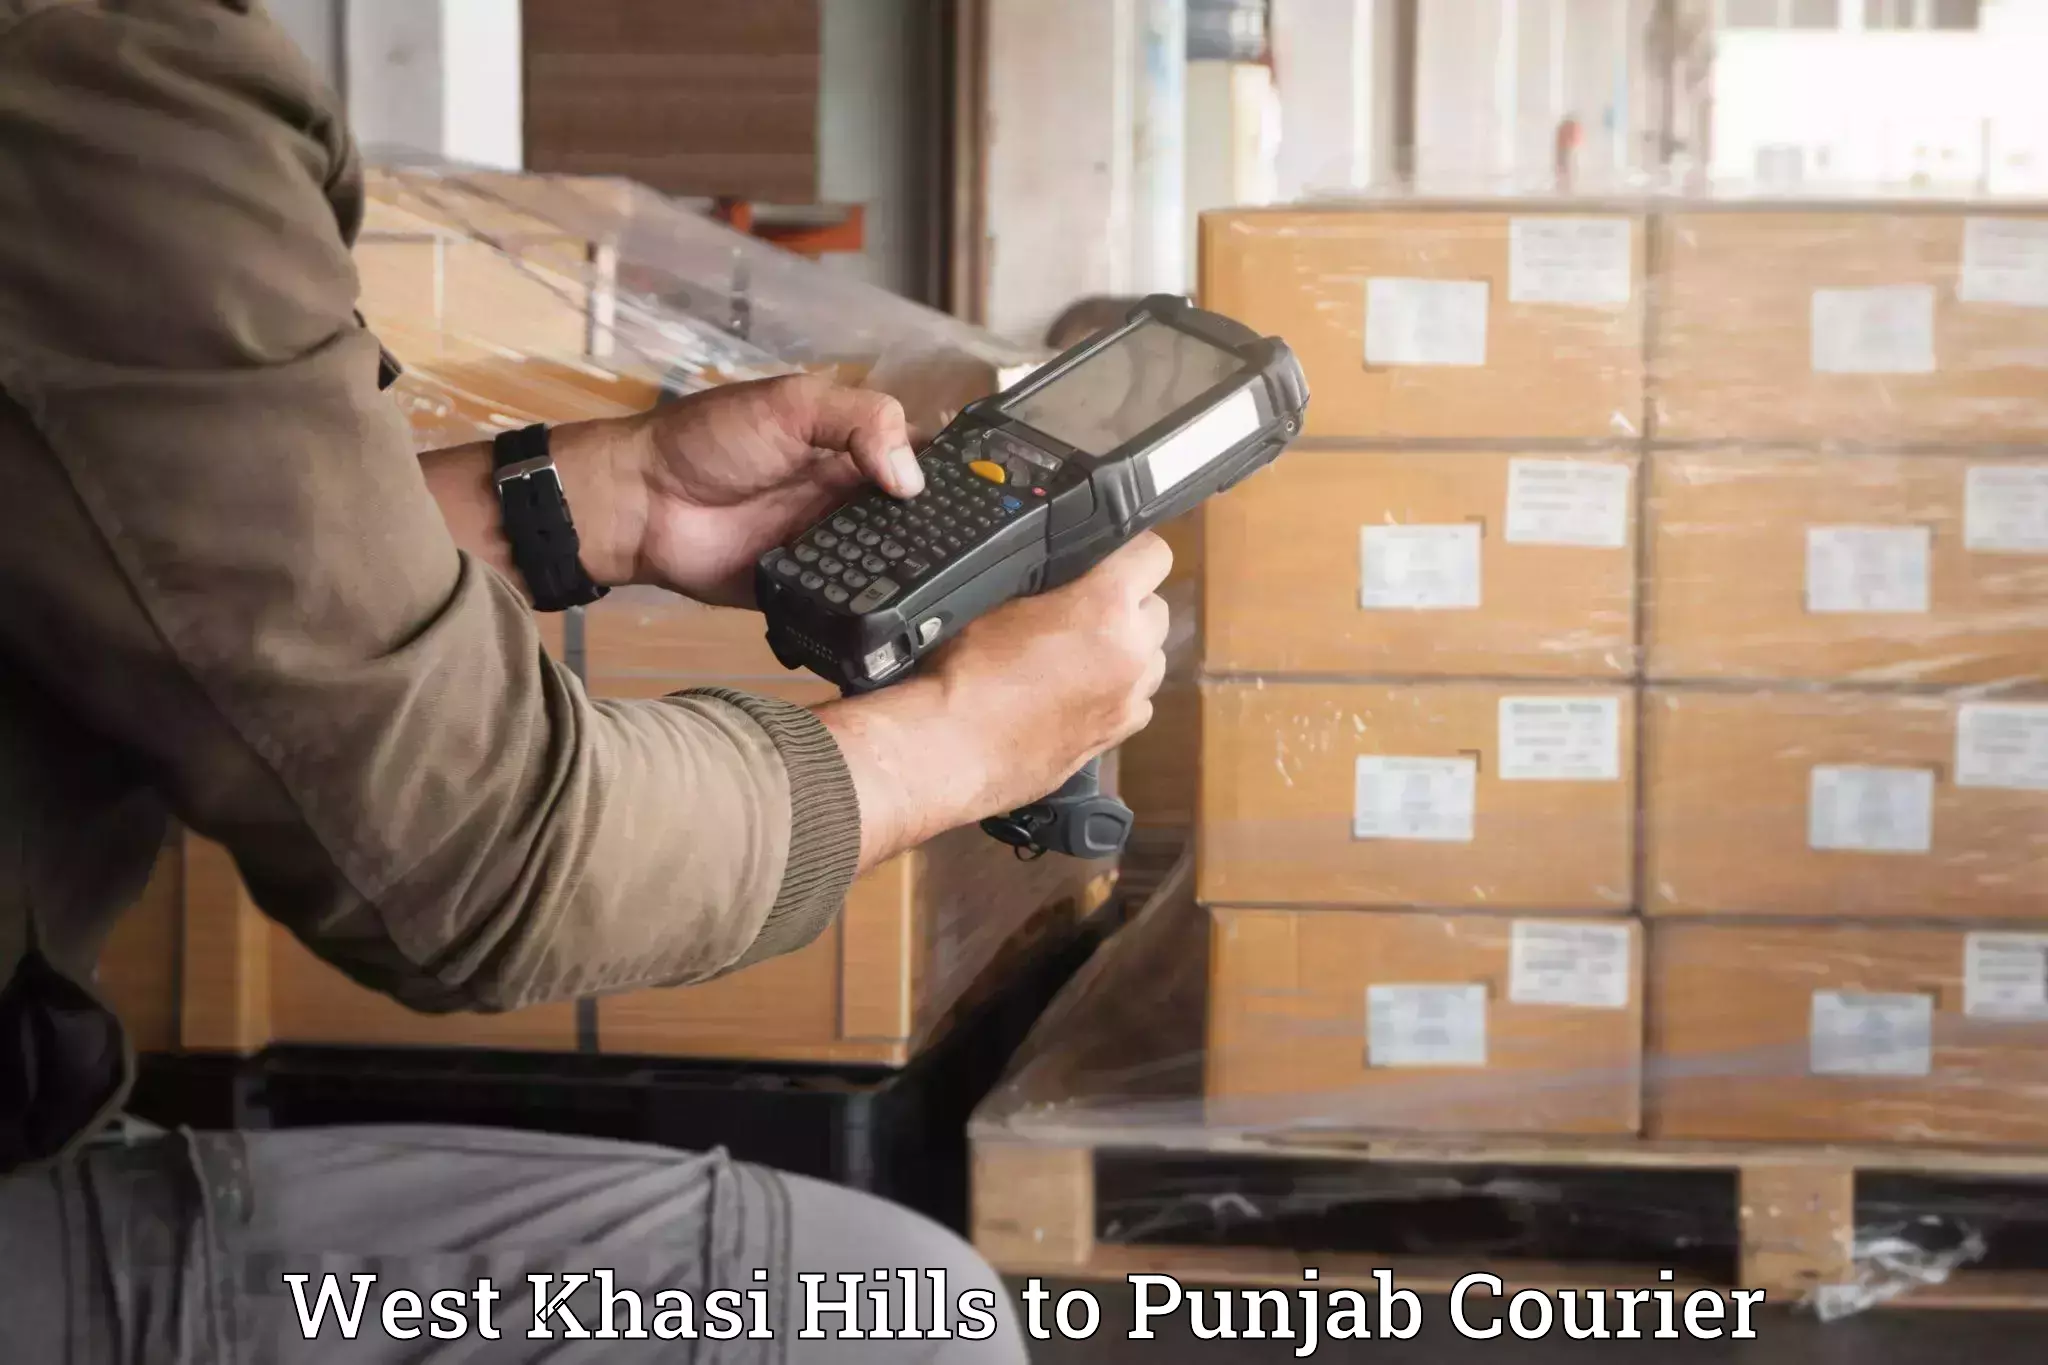 Furniture moving specialists West Khasi Hills to Punjab